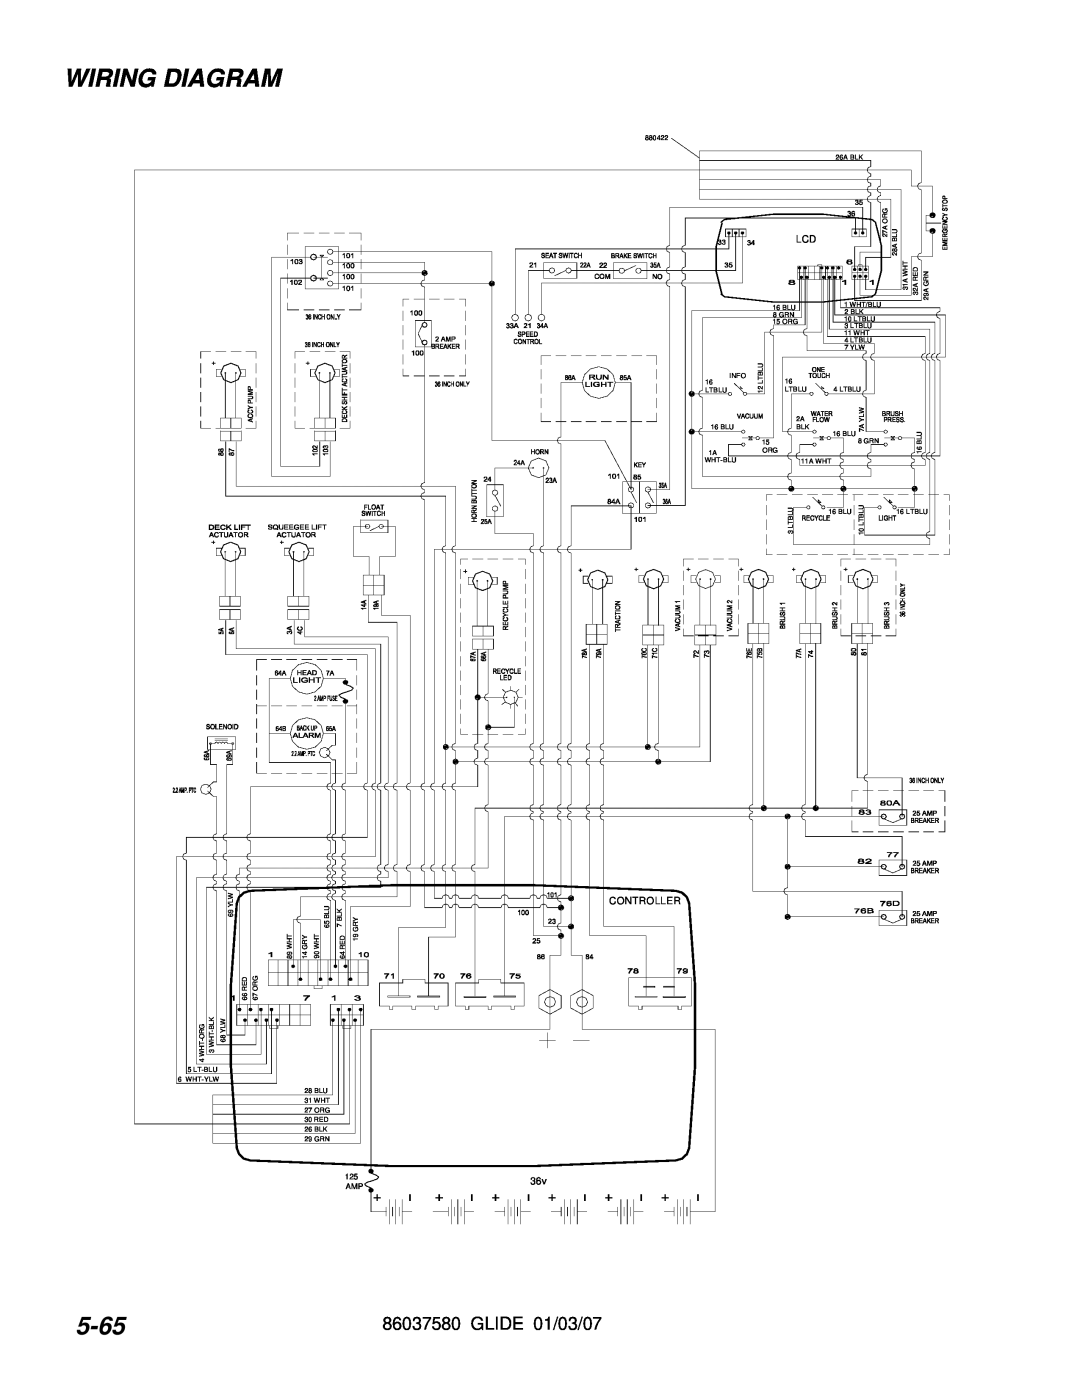 Windsor 86037580 manual Wiring Diagram, 5-65, Controller 